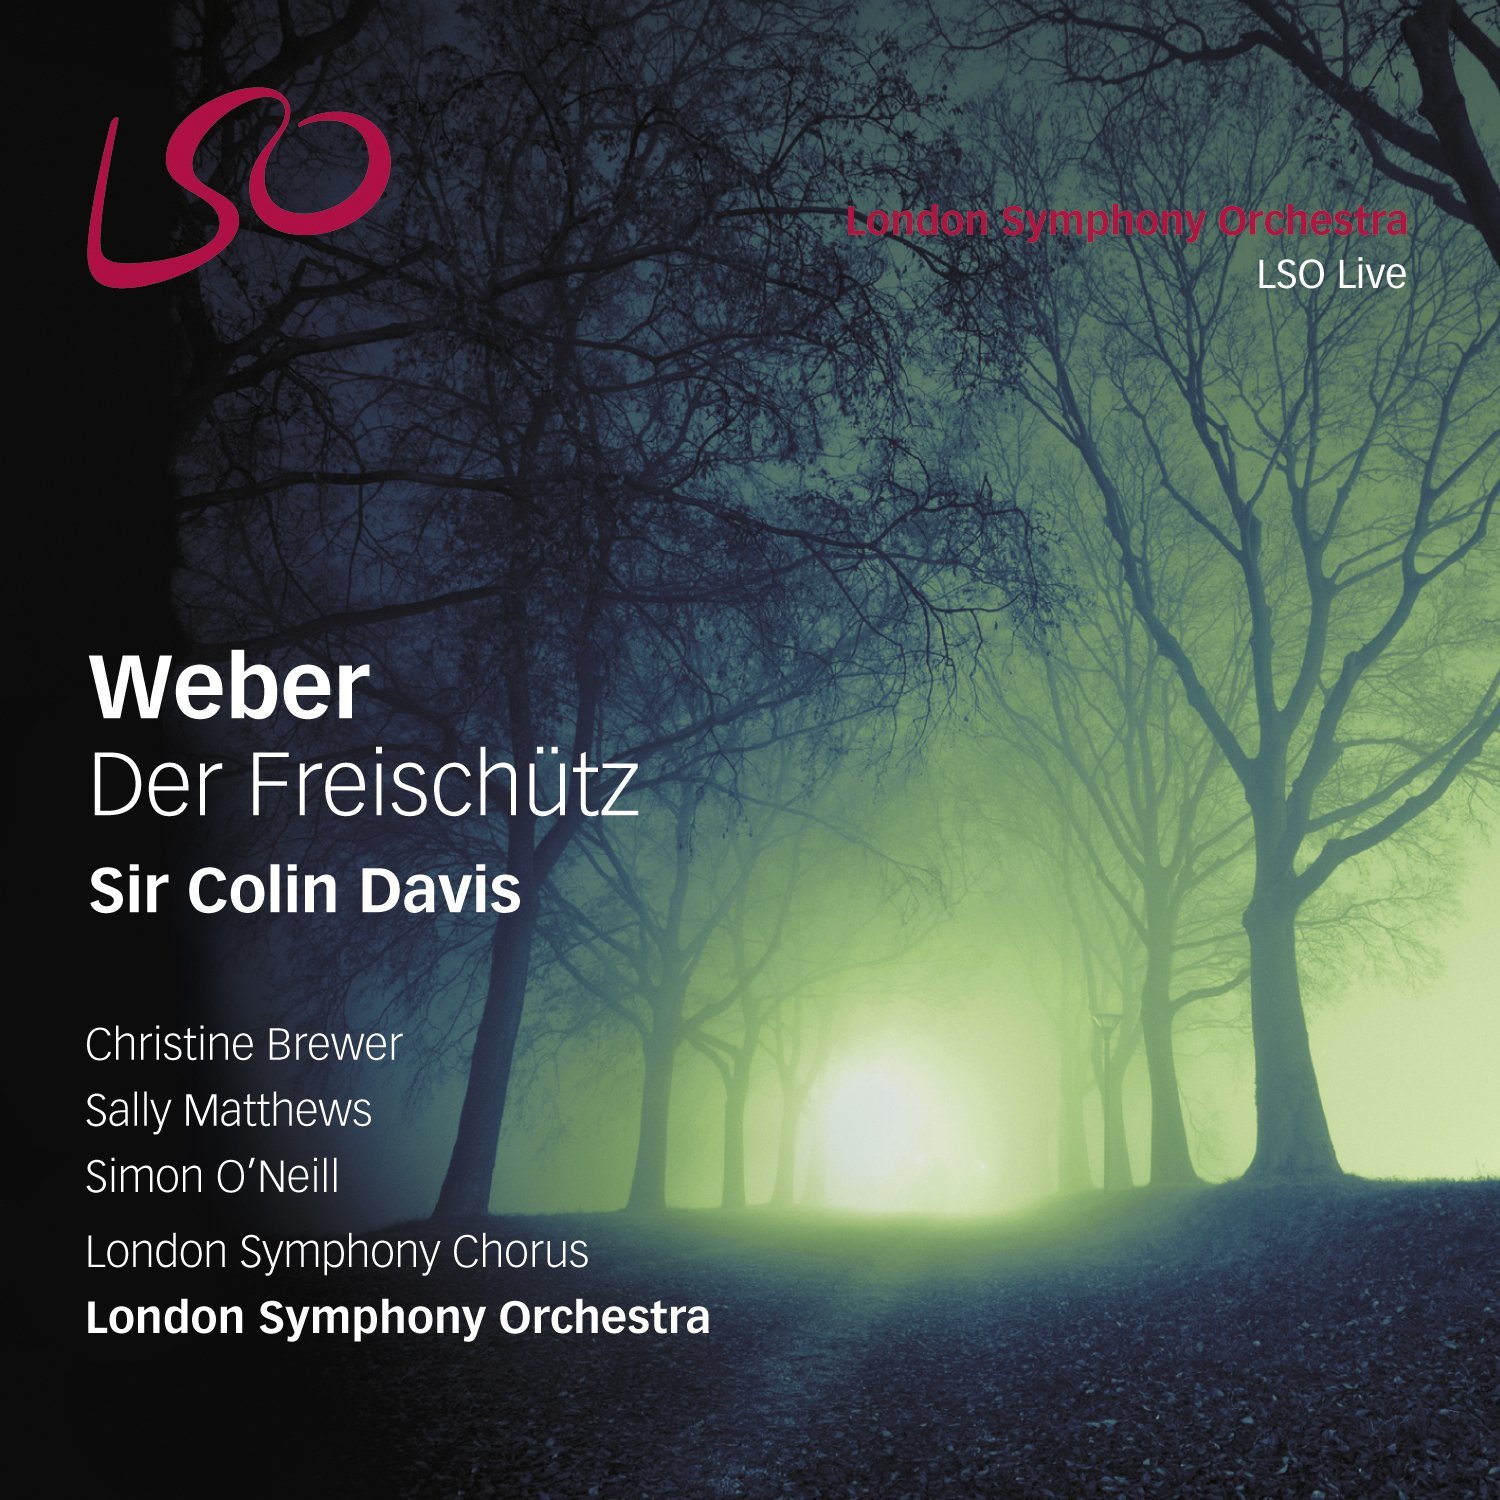 Sir Colin Davis, London Symphony Orchestra - Weber: Der Freischutz (2013) [HDTracks FLAC 24bit/96kHz]